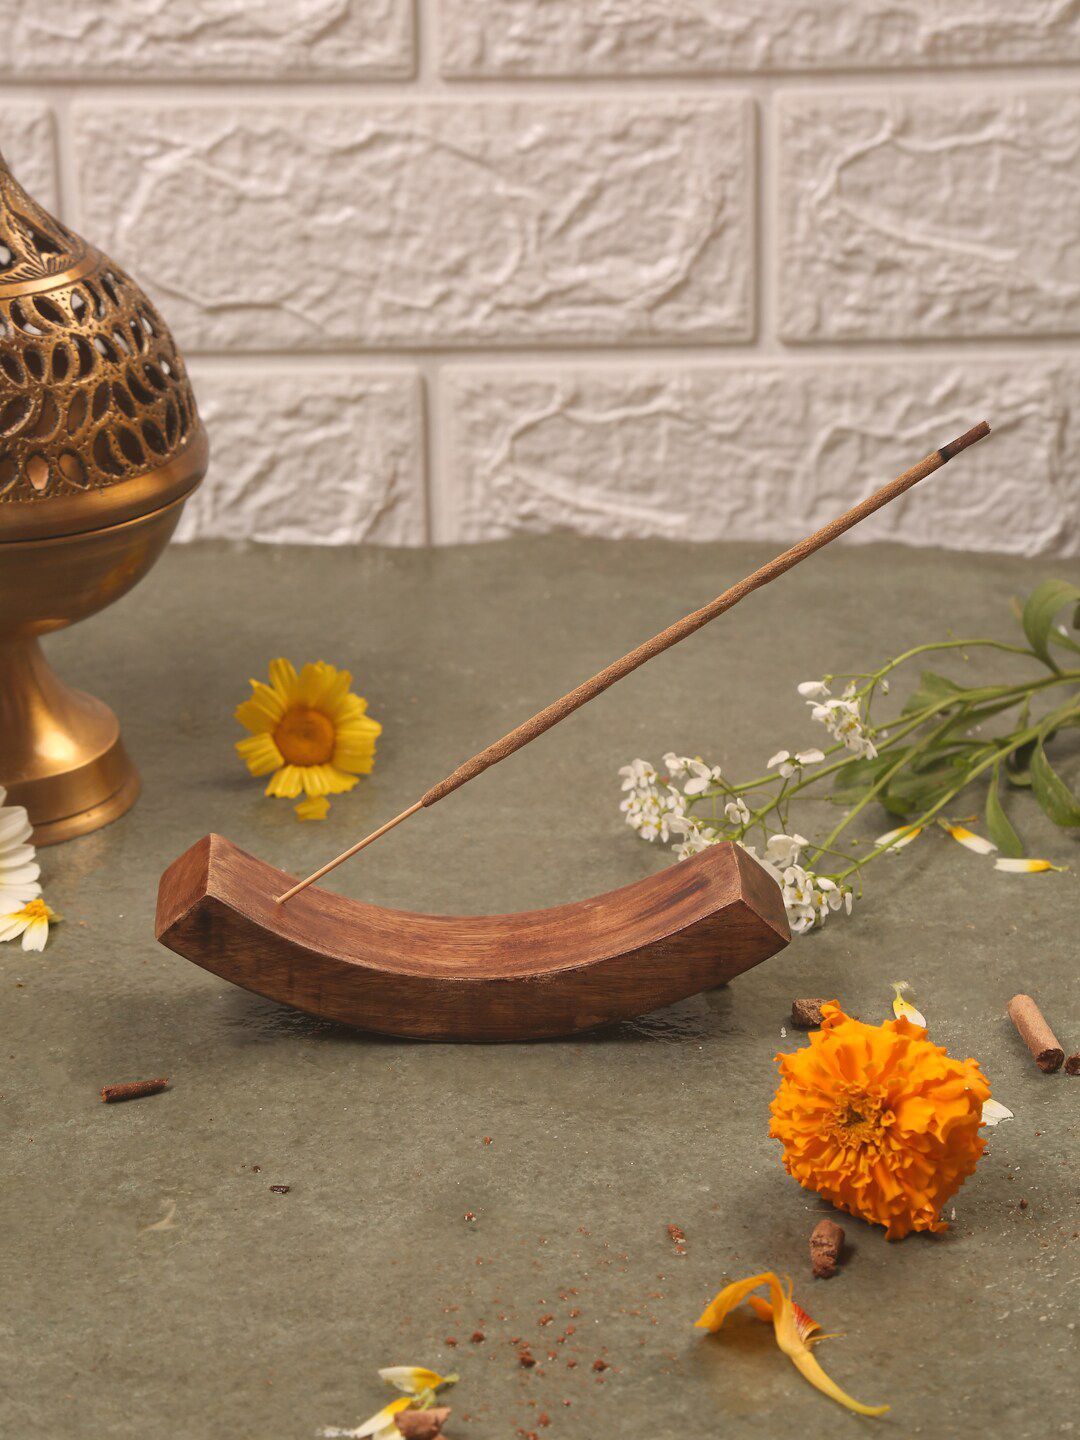 EK BY EKTA KAPOOR Brown Wooden Wooden Incense Stick Holder Price in India